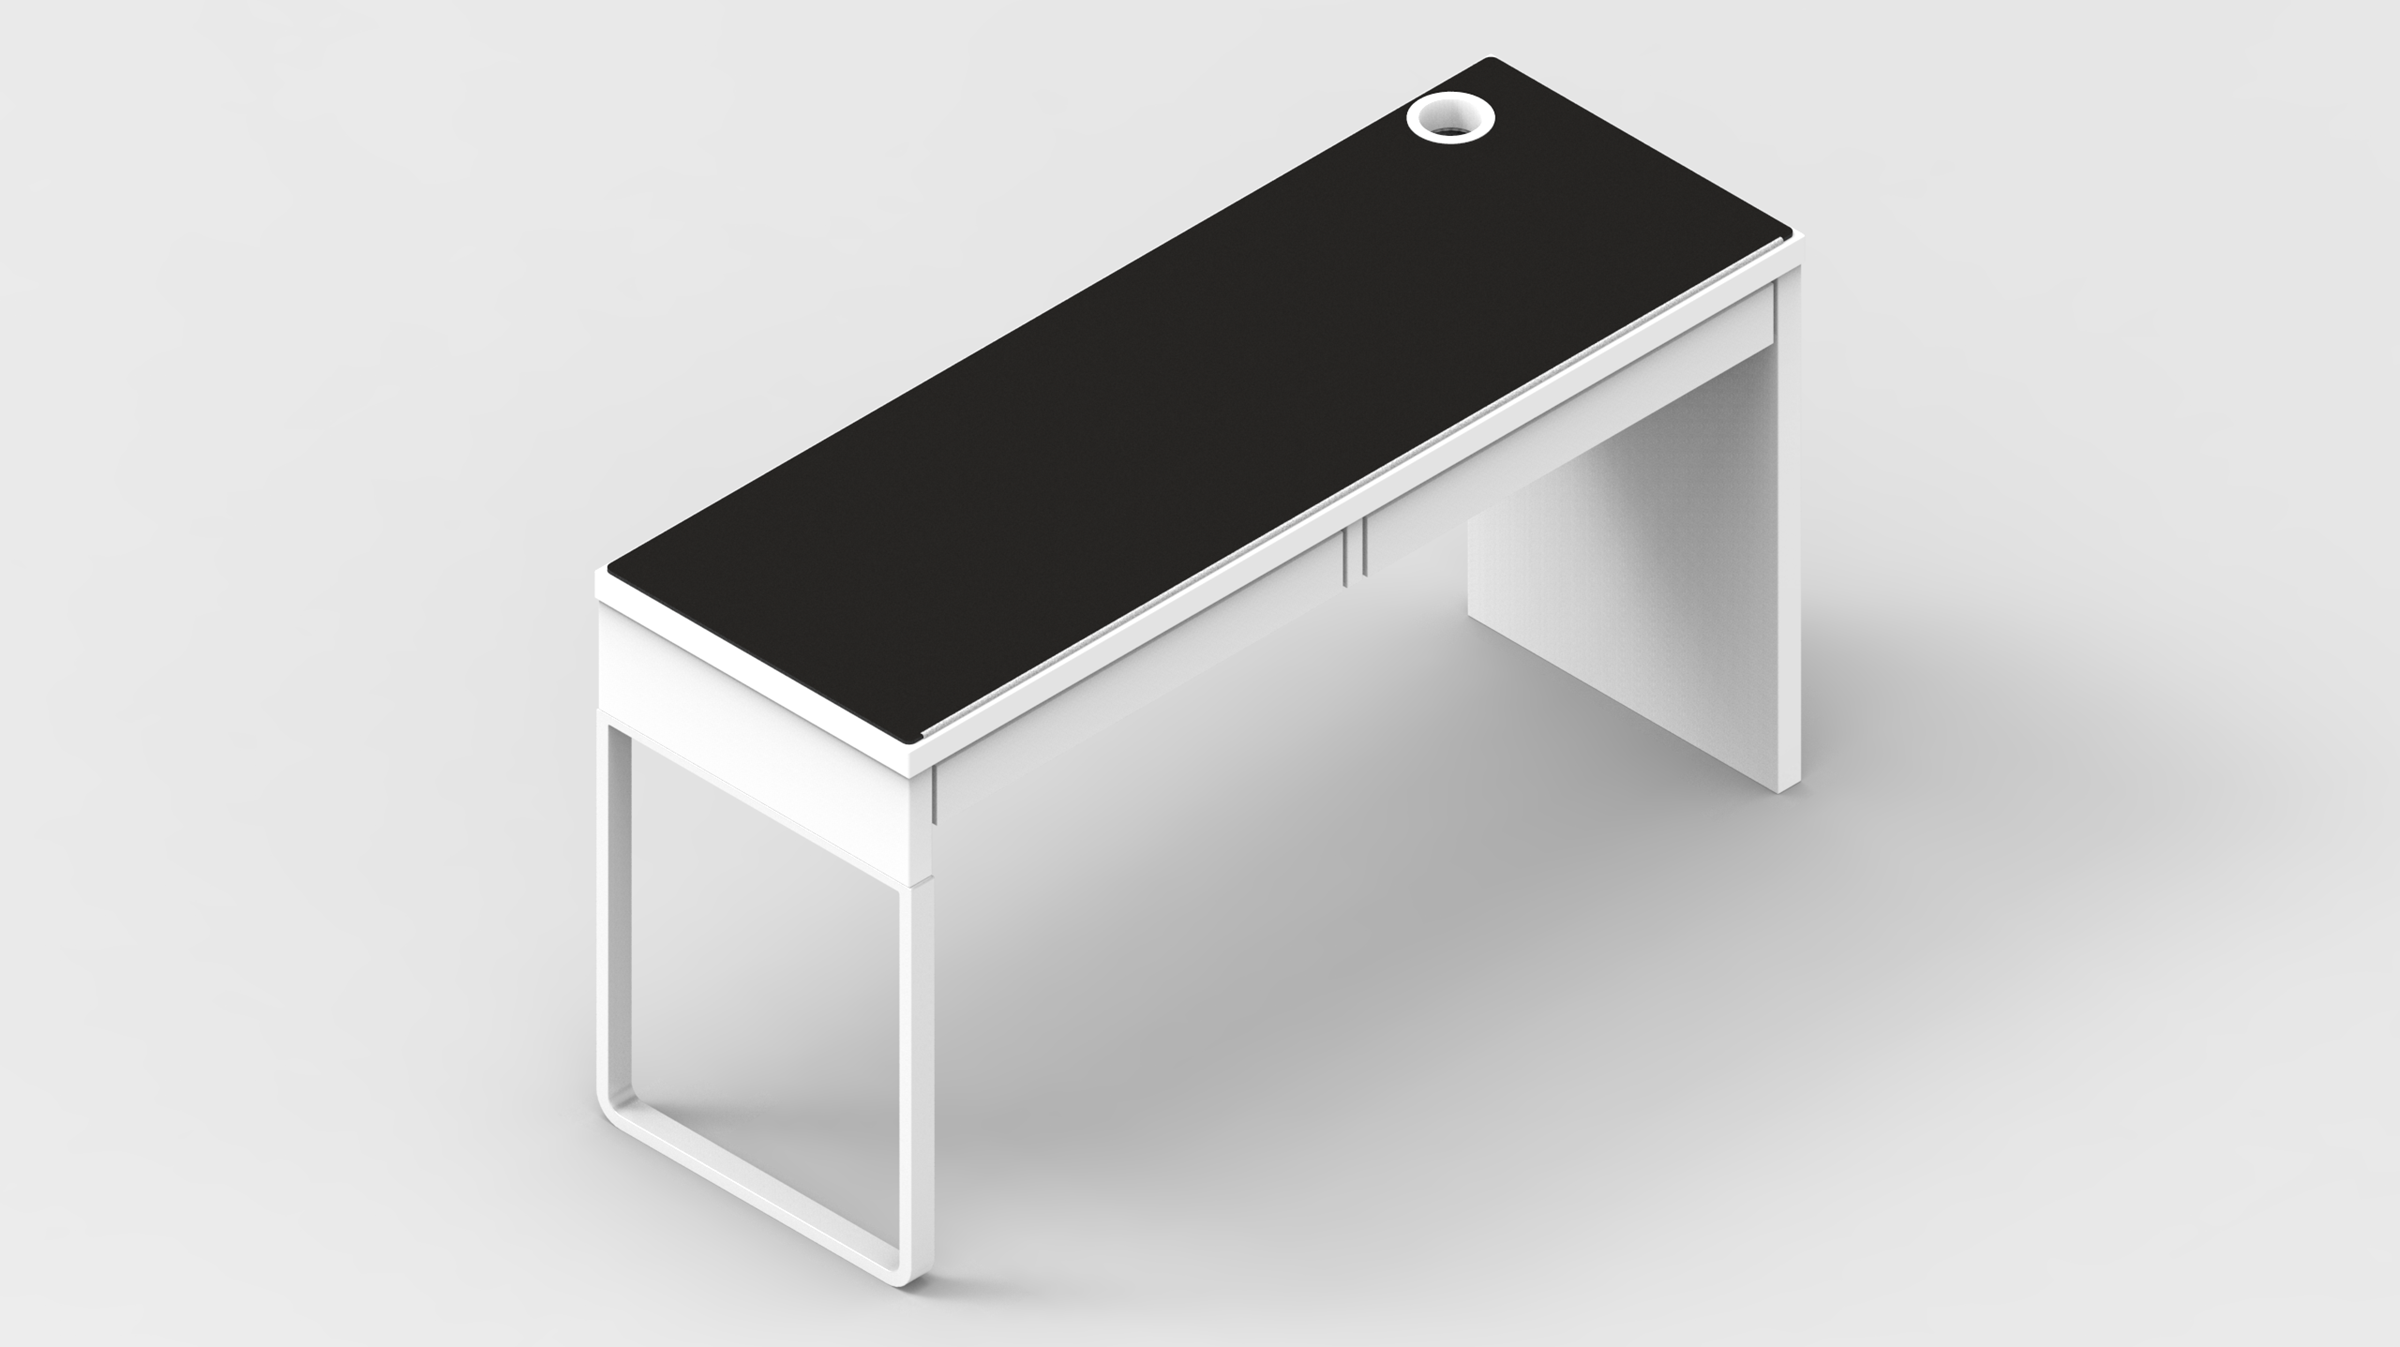 MK Black w/ White Stitching IKEA MICKE Desk Mat (56" / 142 cm) Full-desk Mouse Pad MKLYTFYS3Y |59144|